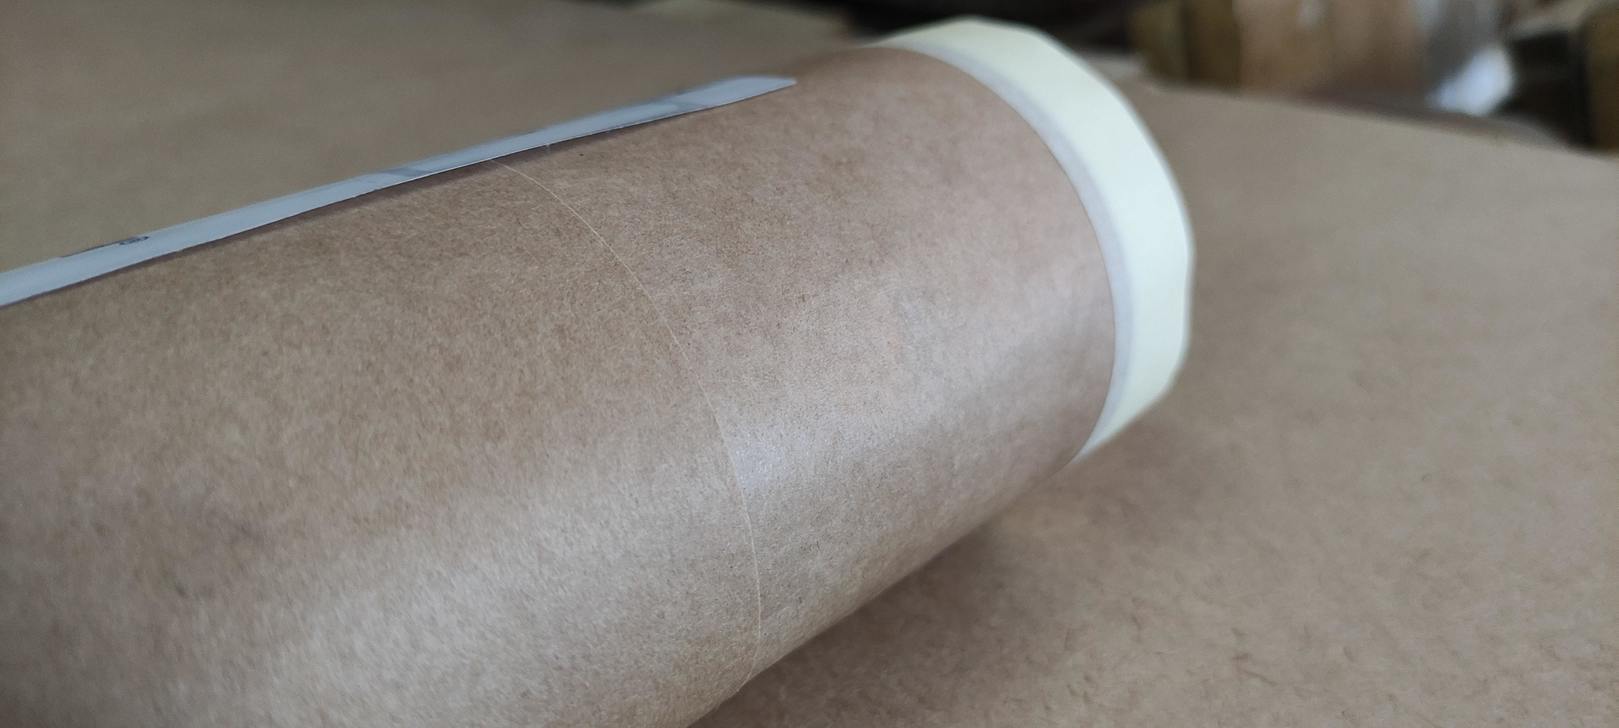 Укрывочная защитная бумага с малярной лентой 30 см х 25 м STORCH для малярных работ, покраски